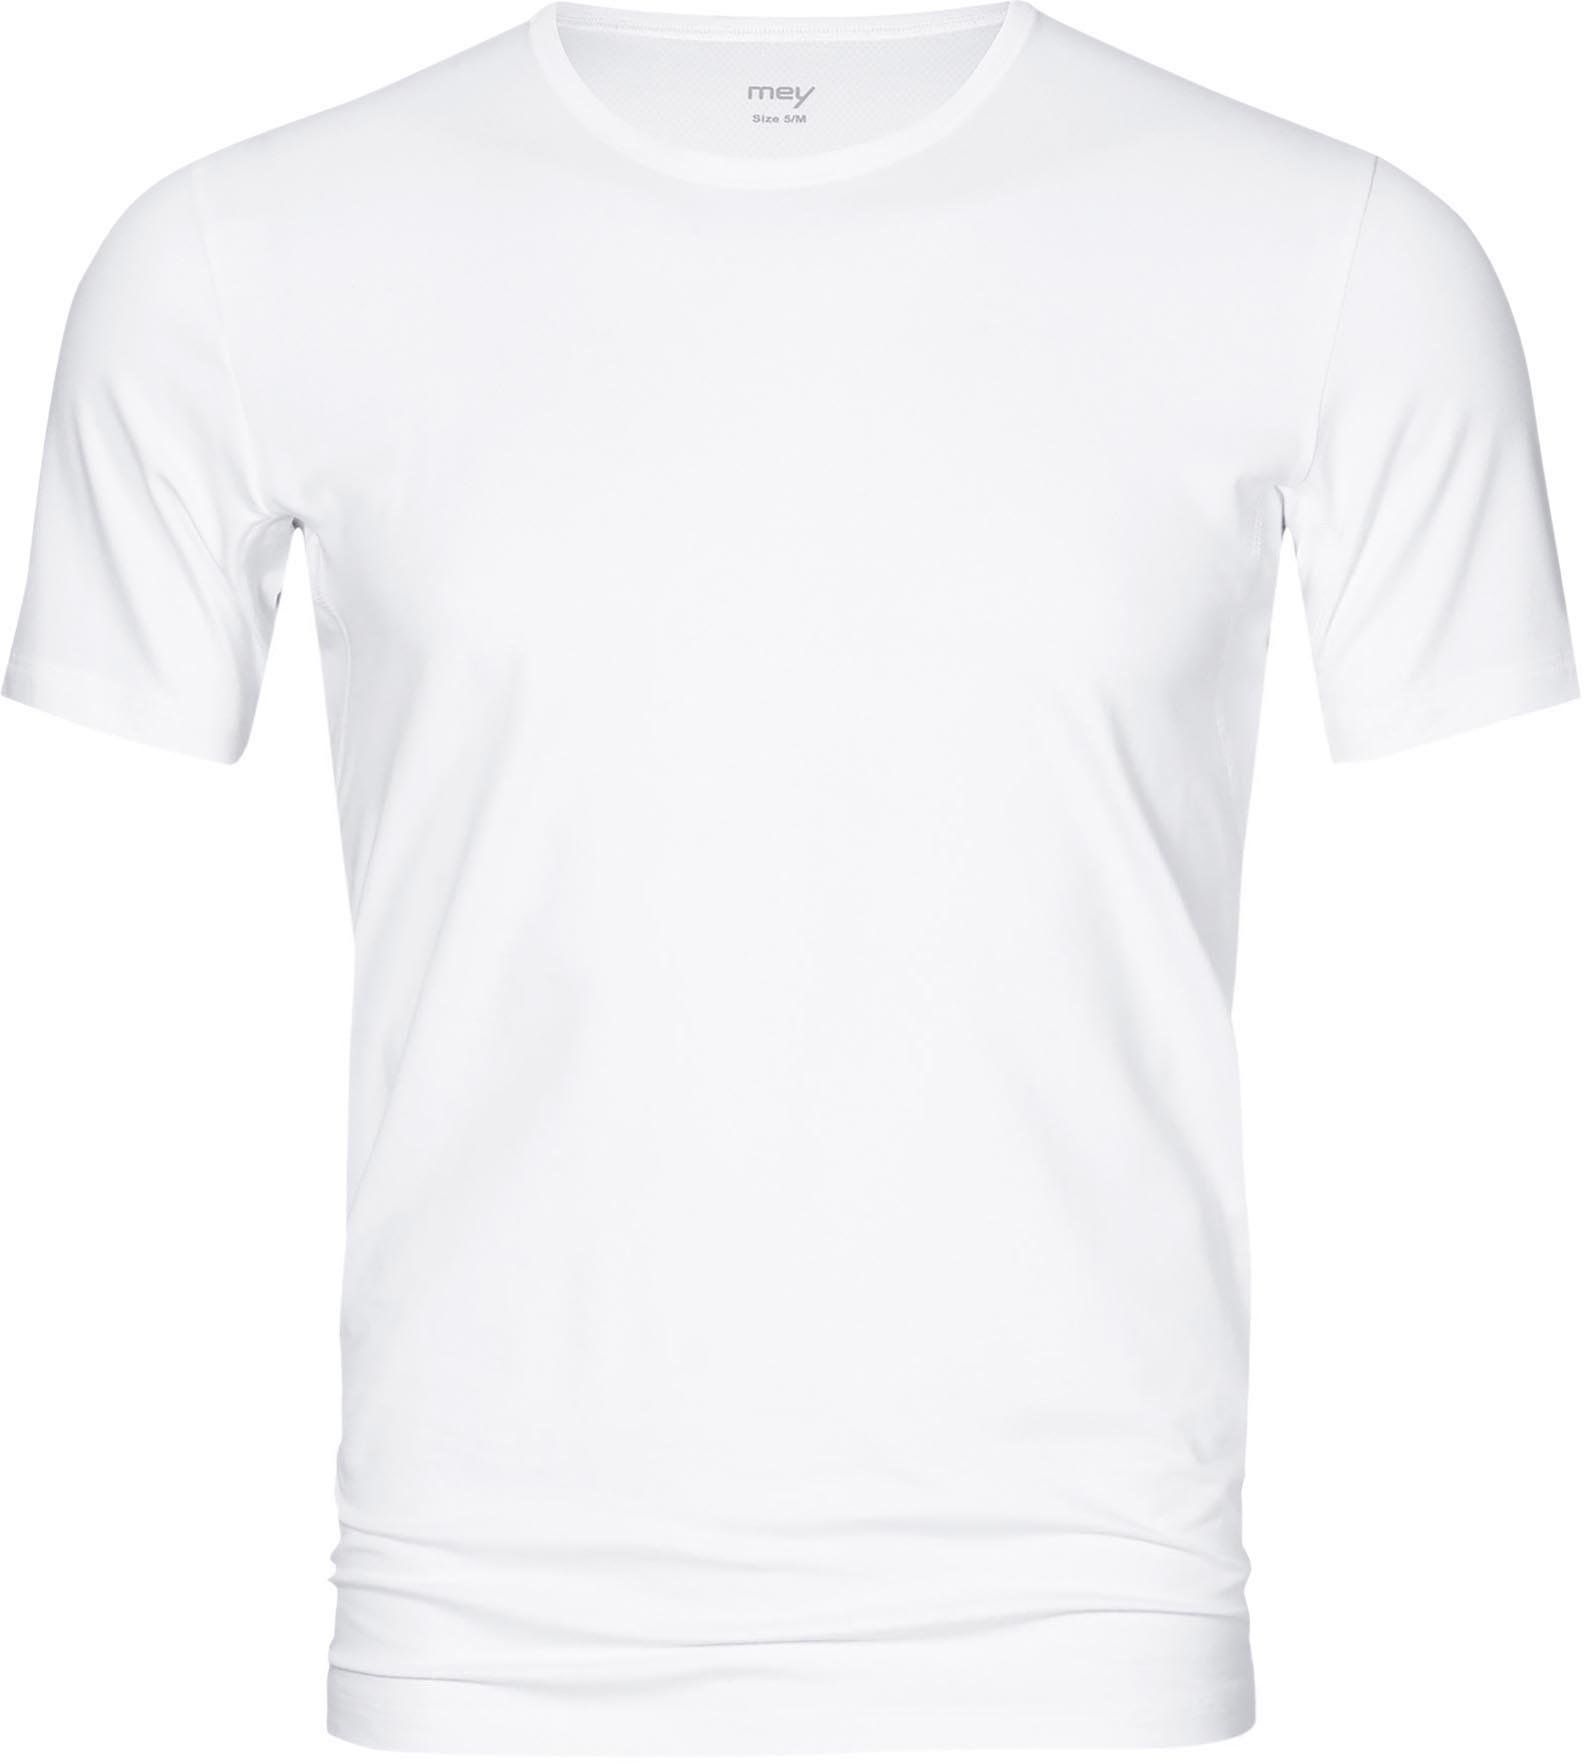 Mey O-neck Dry Cotton T-shirt White size L